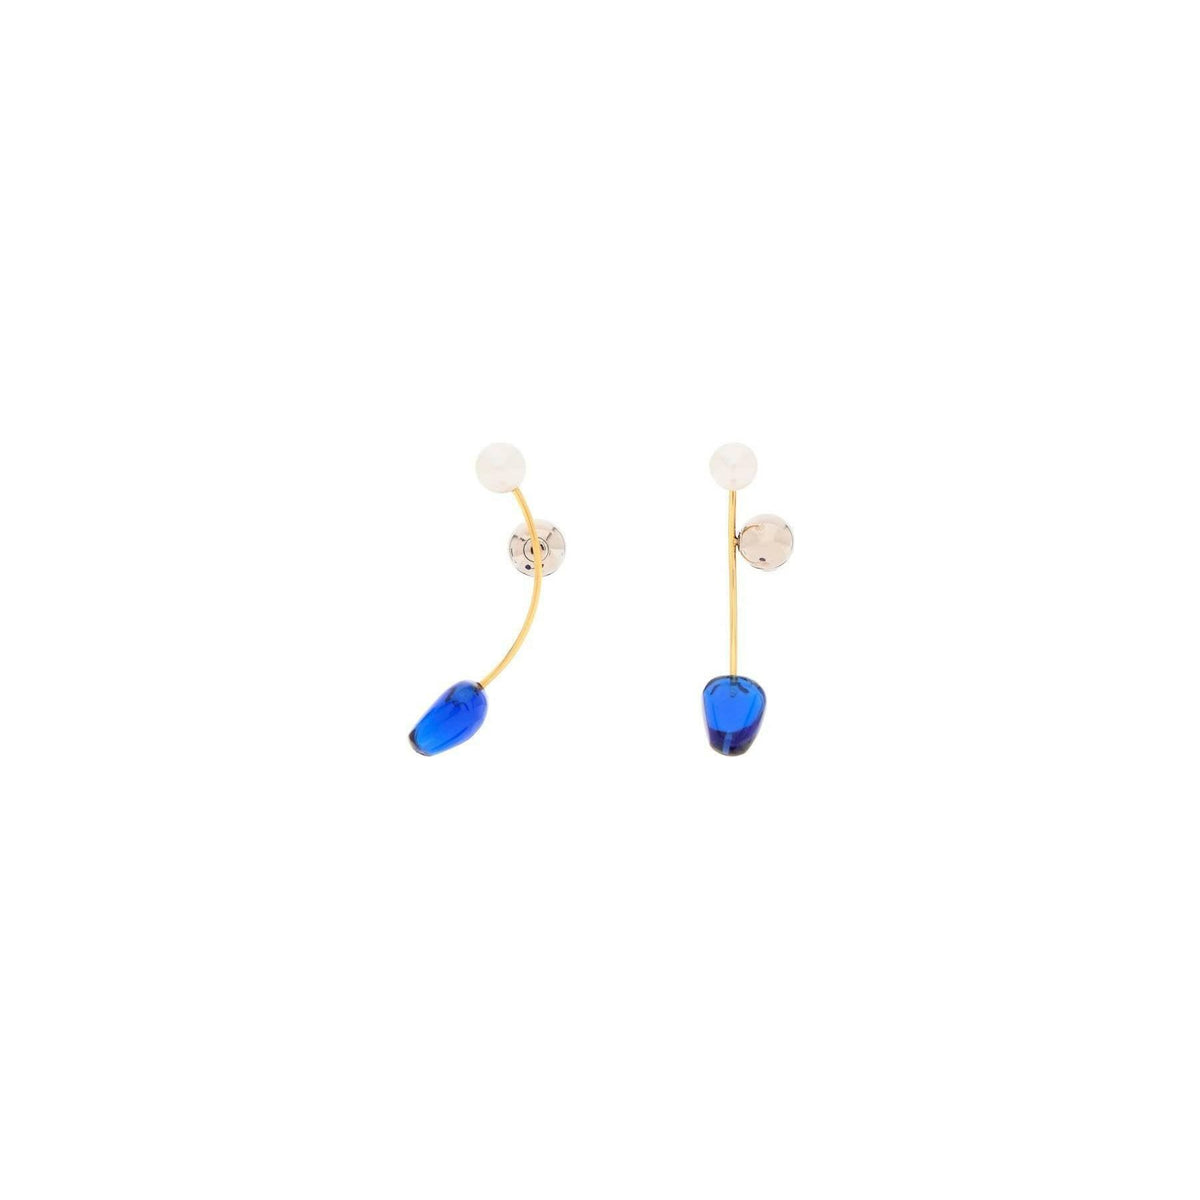 Blue Earrings With Pearls And Stones DRIES VAN NOTEN JOHN JULIA.